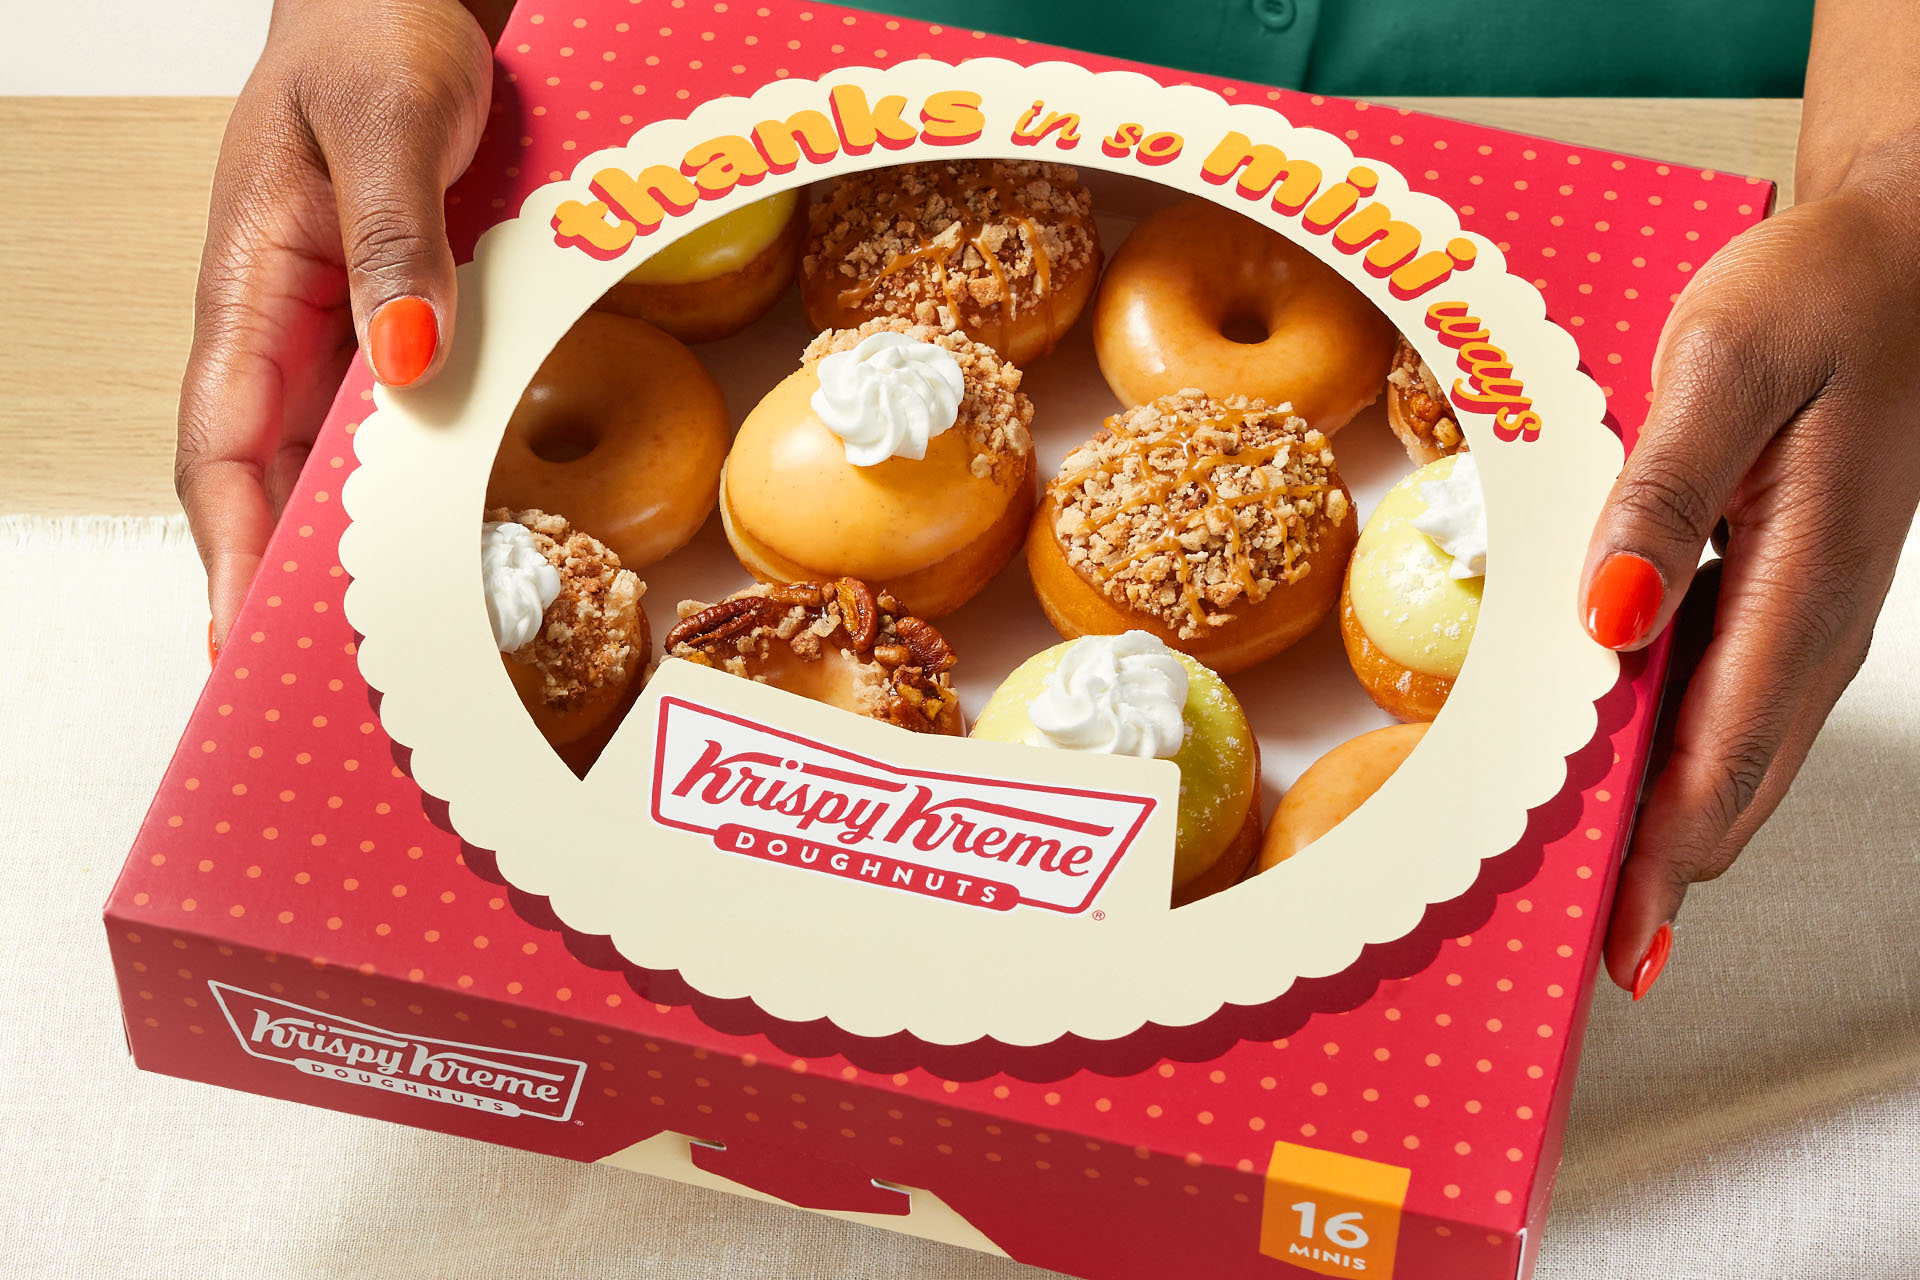 Krispy Kreme Original Glazed Doughnuts, Minis, 16 Count